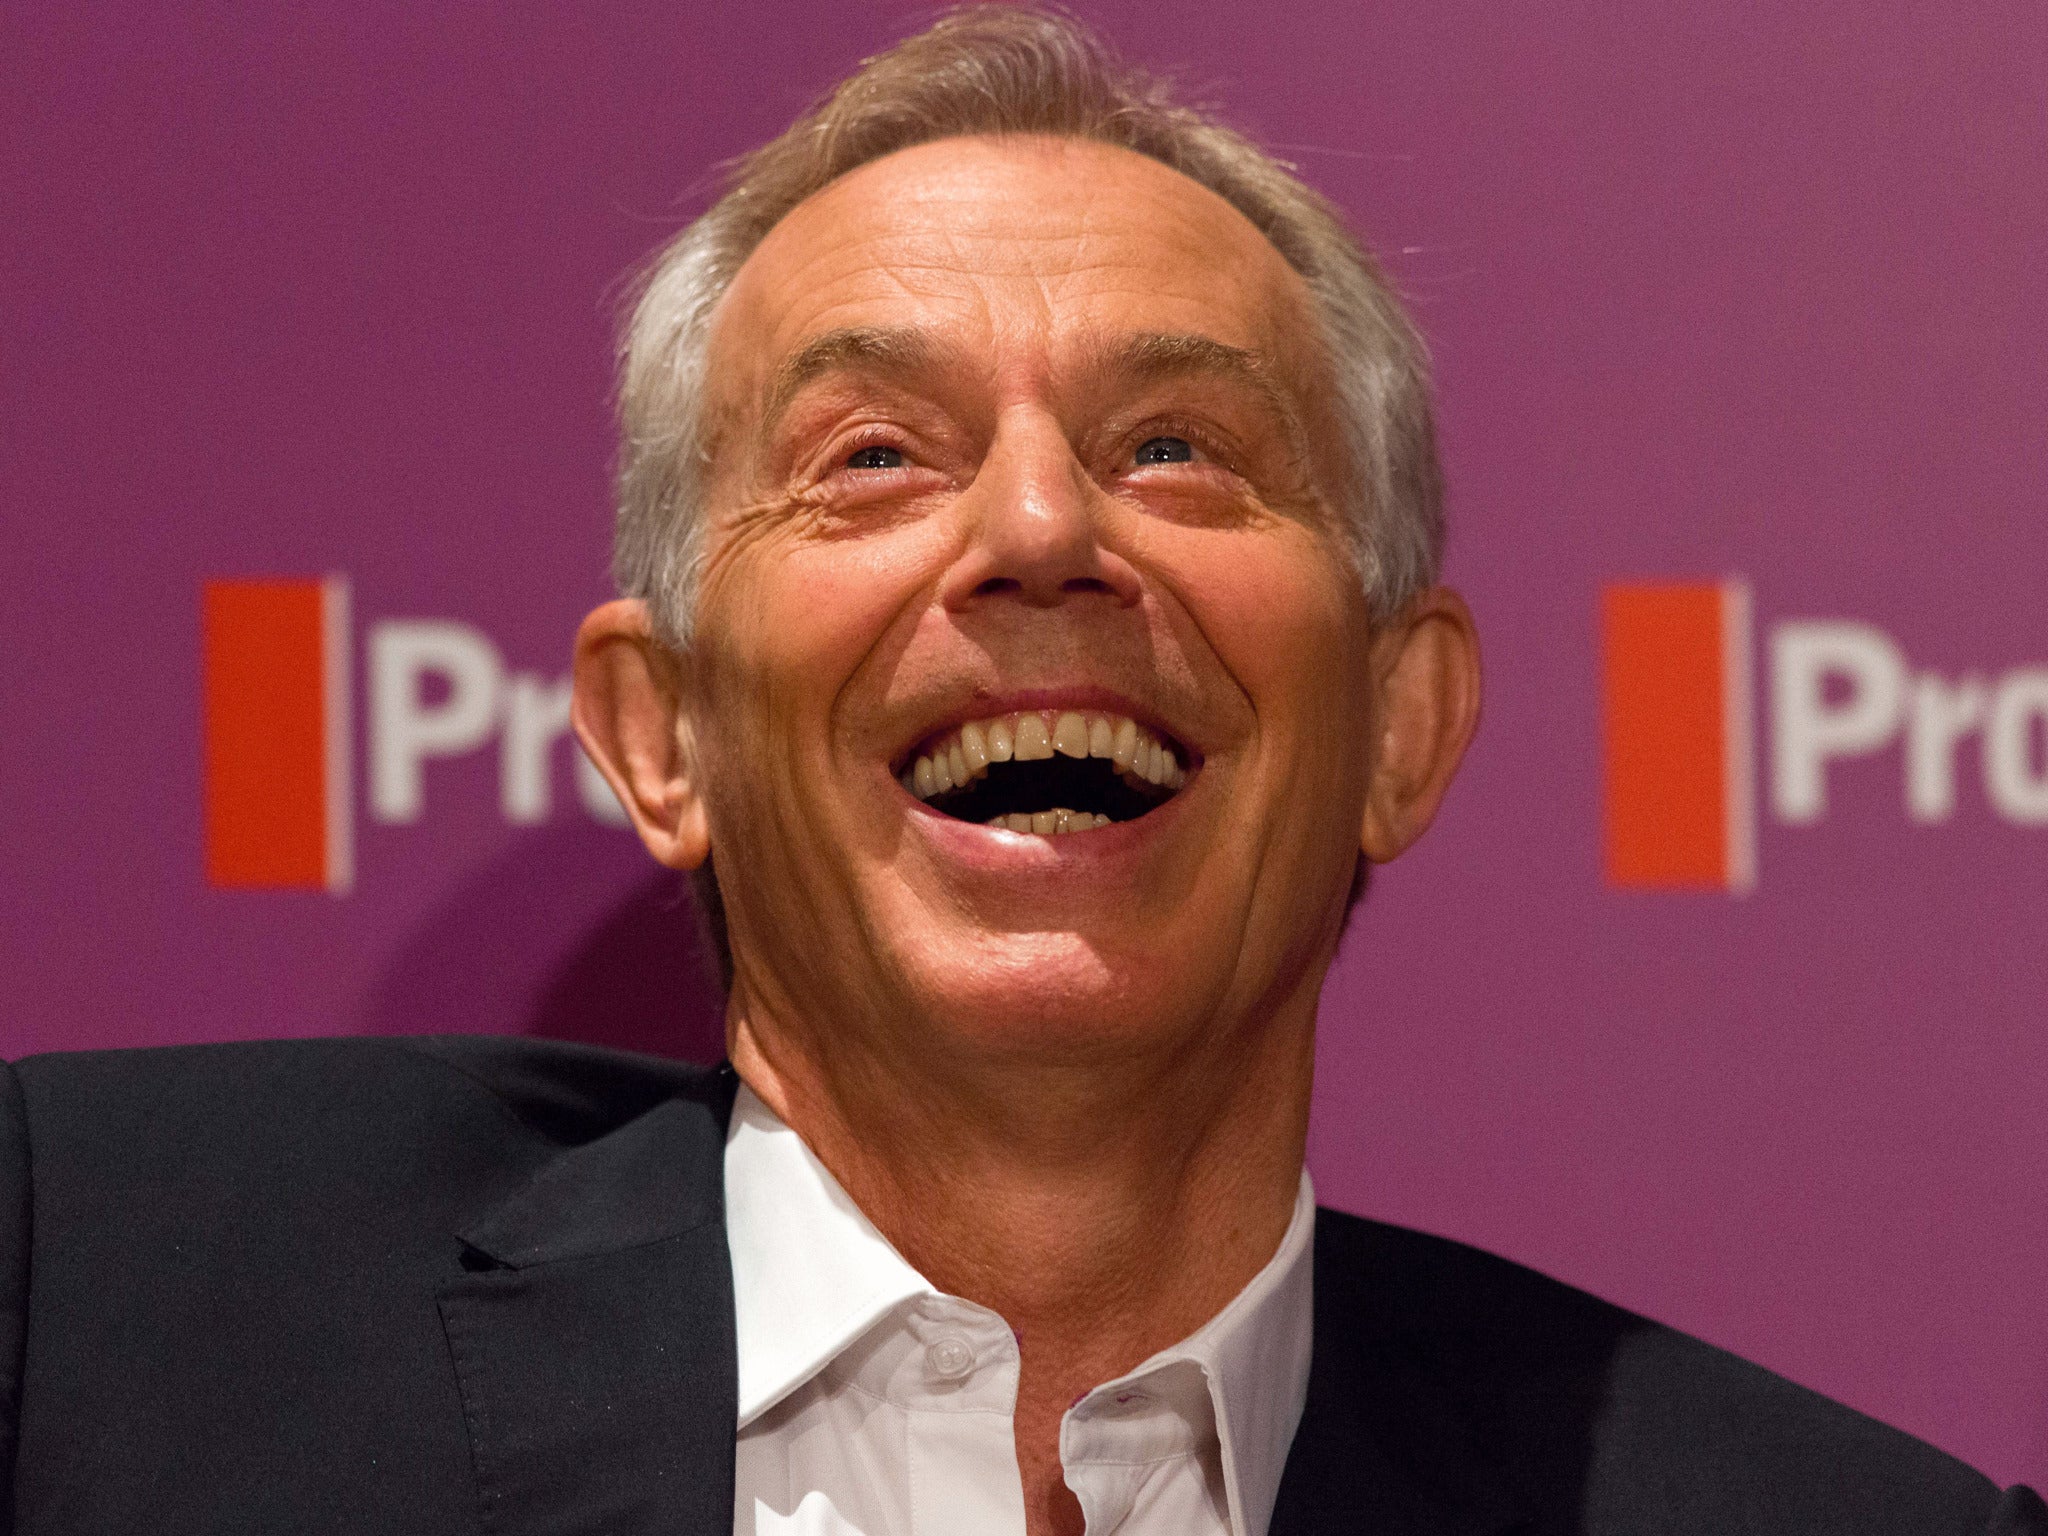 Tony Blair doesn't believe Corbyn should lead the party